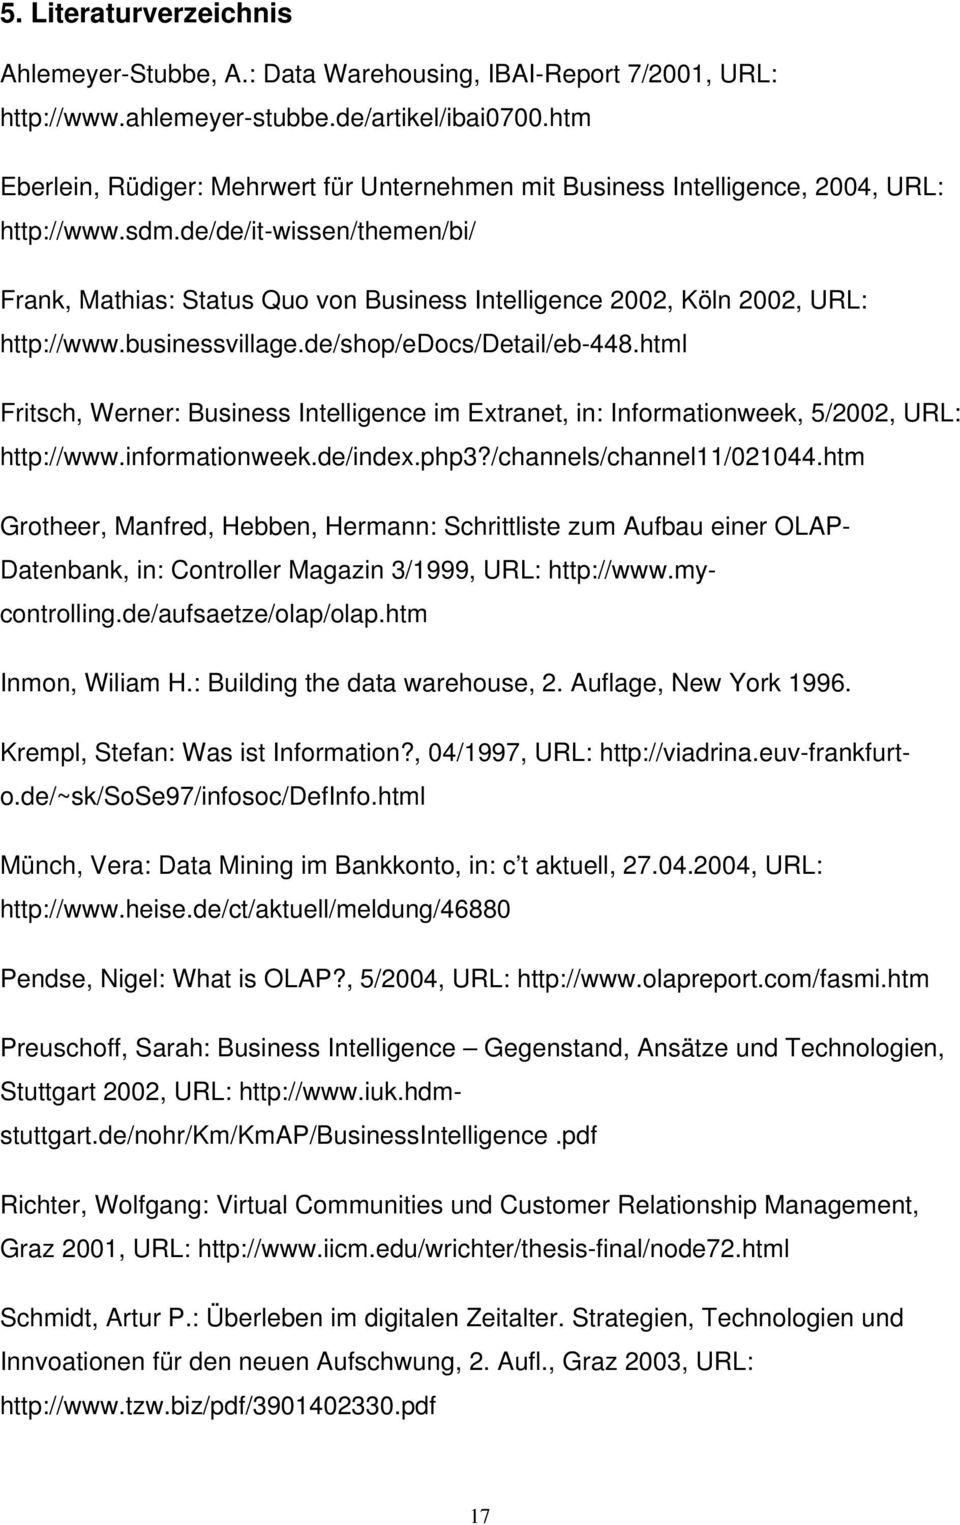 de/de/it-wissen/themen/bi/ Frank, Mathias: Status Quo von Business Intelligence 2002, Köln 2002, URL: http://www.businessvillage.de/shop/edocs/detail/eb-448.